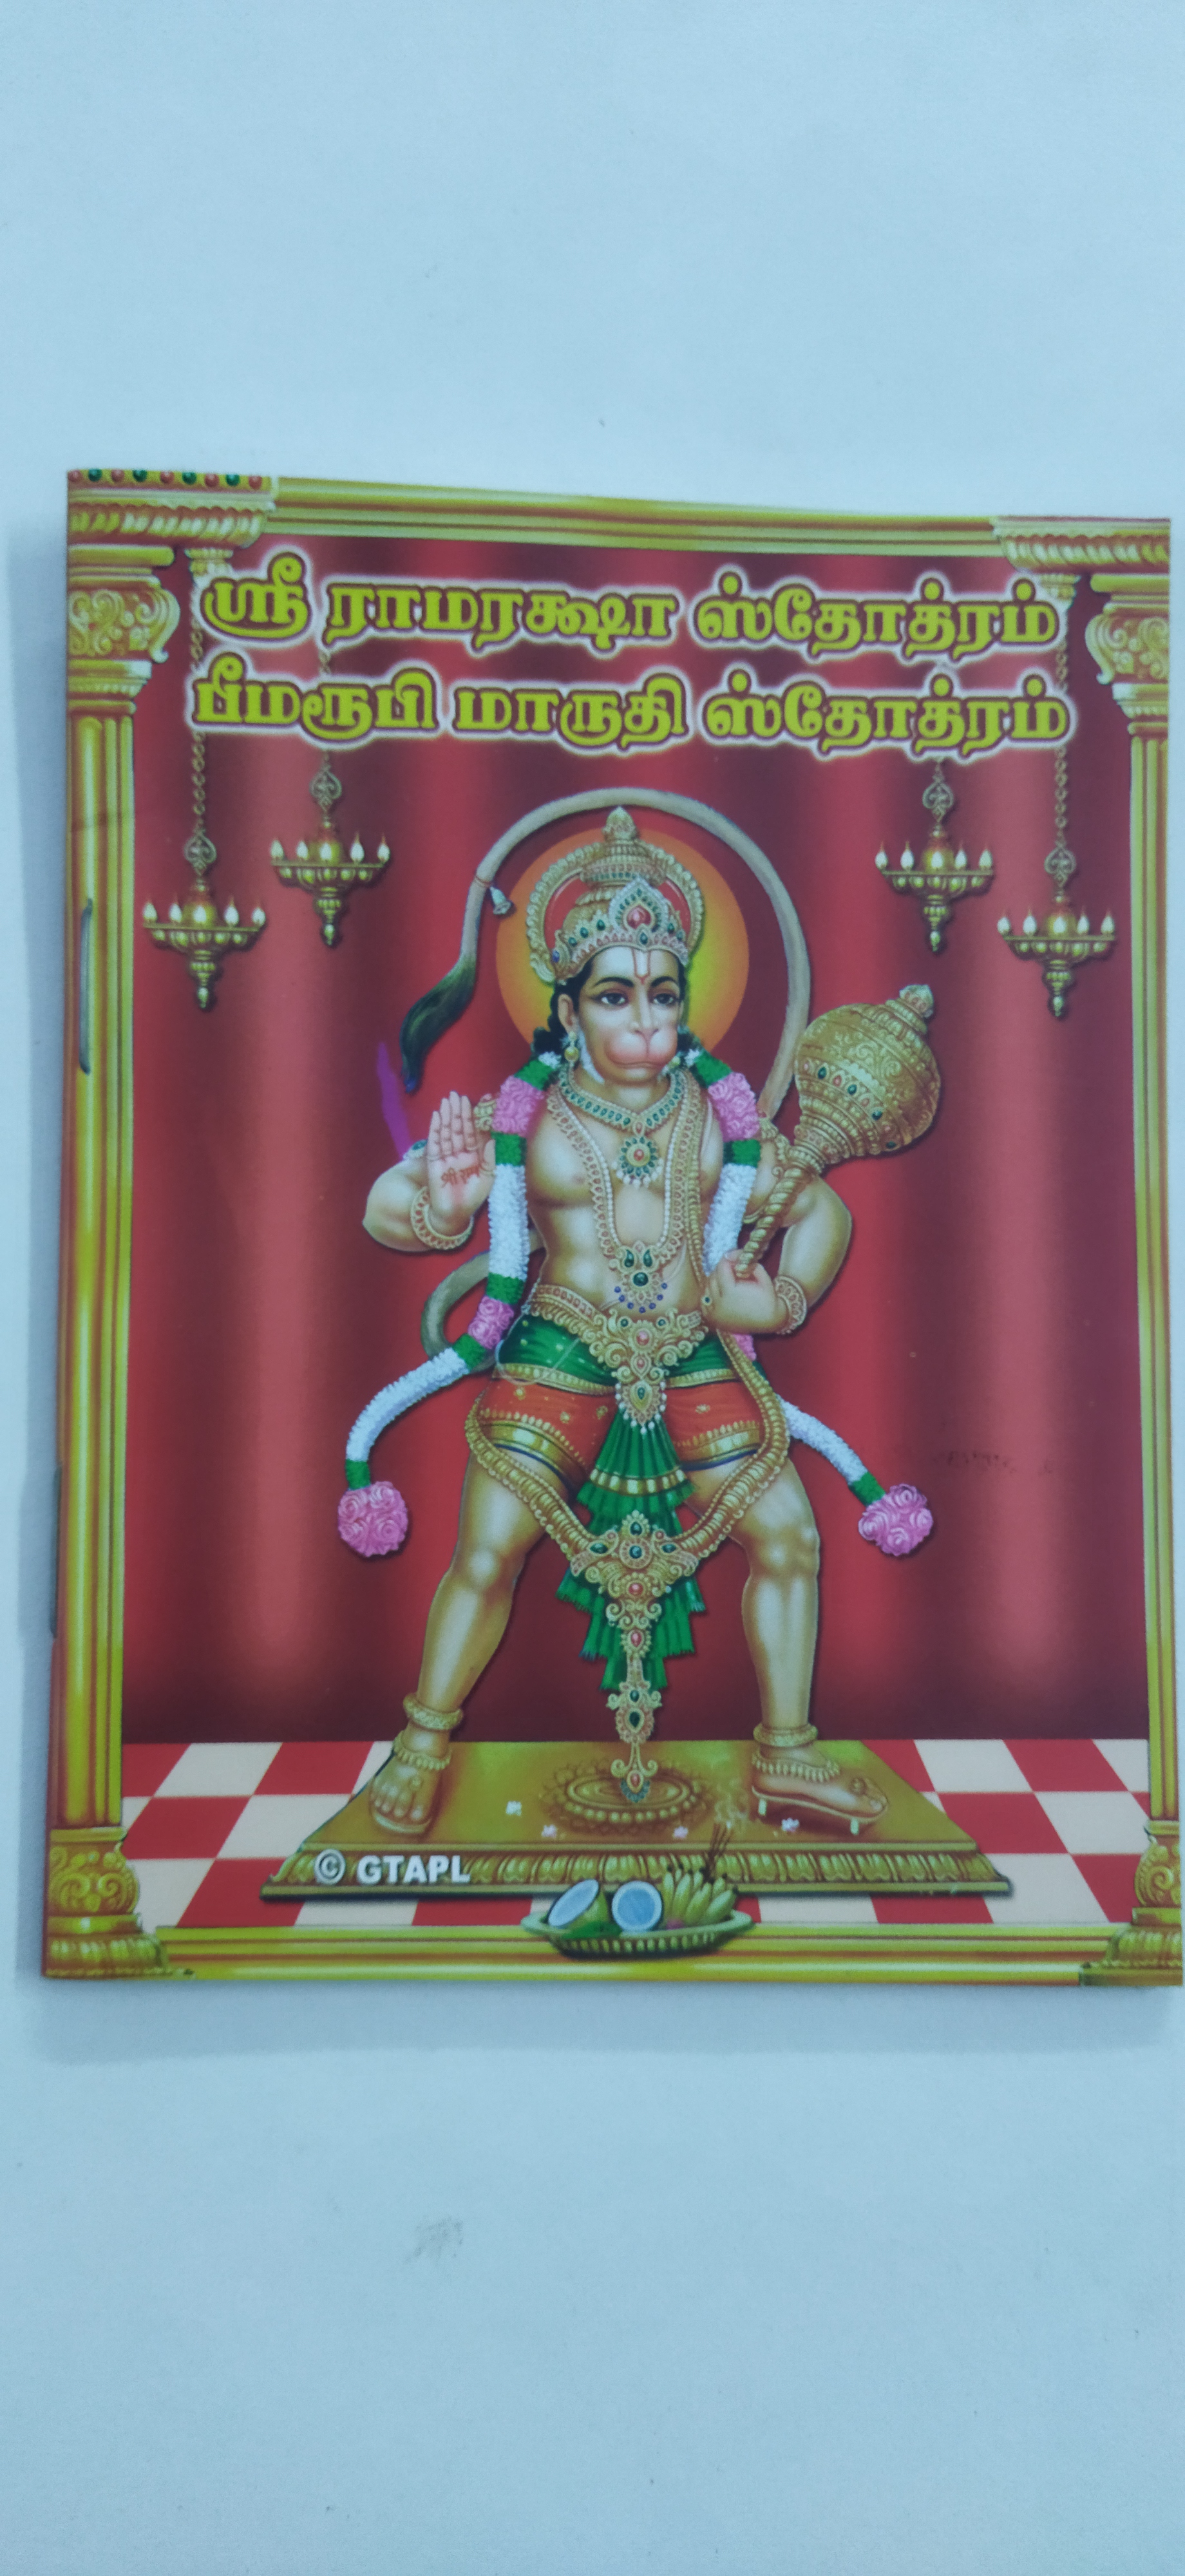 Sri Ramaraksha Stotram & Bheemaroopi Hanuman Stotram-Tamil